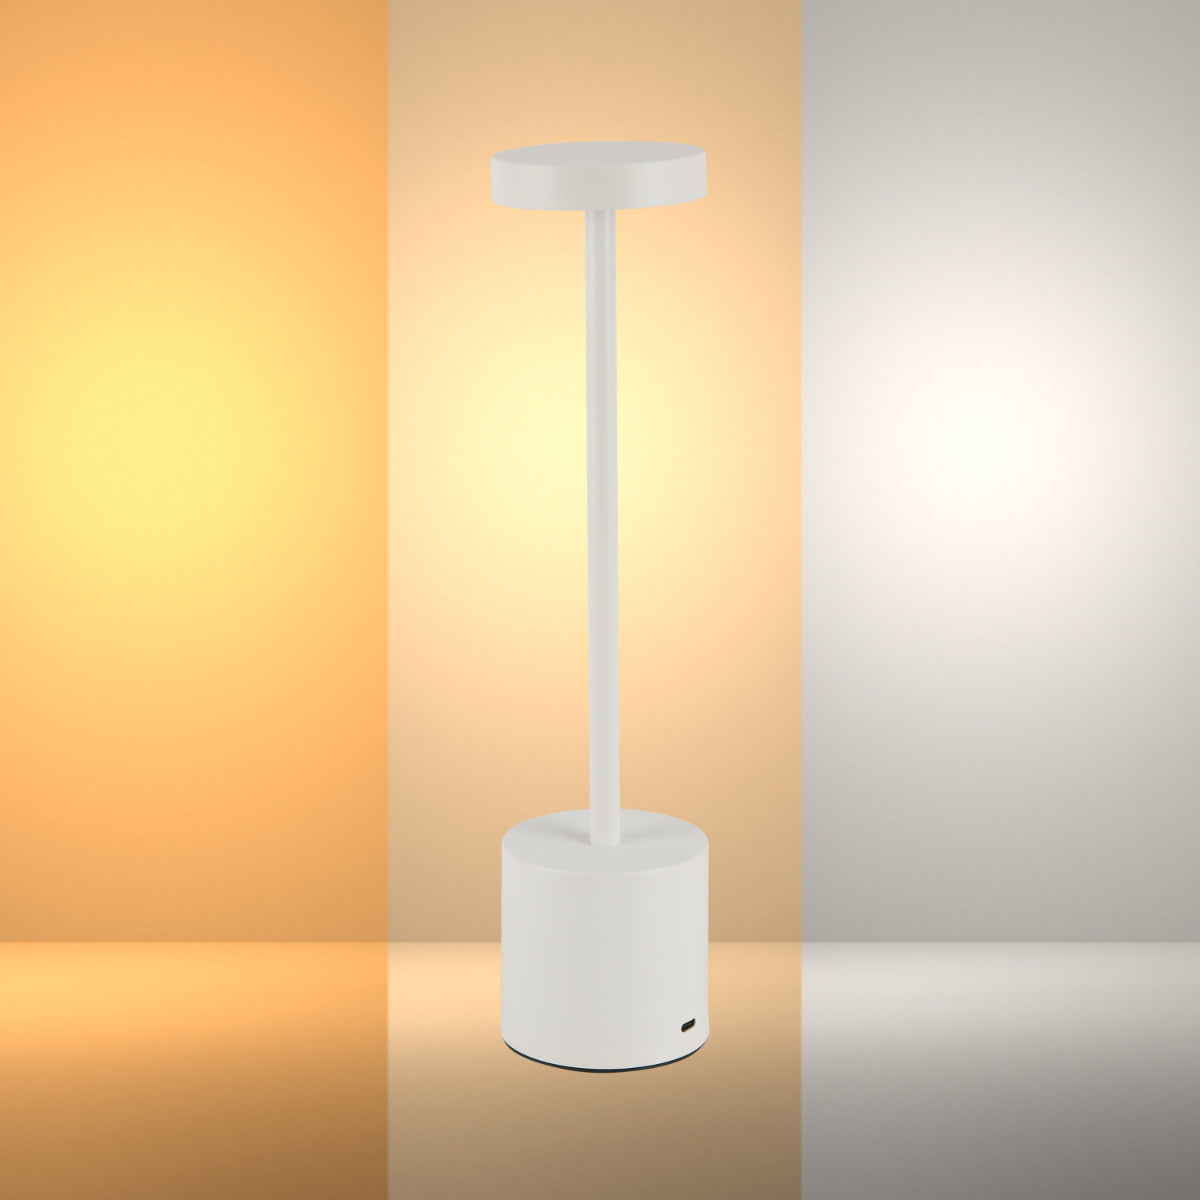 Main image of Sleek Portable LED Column Lamp with CCT Control 130-03744